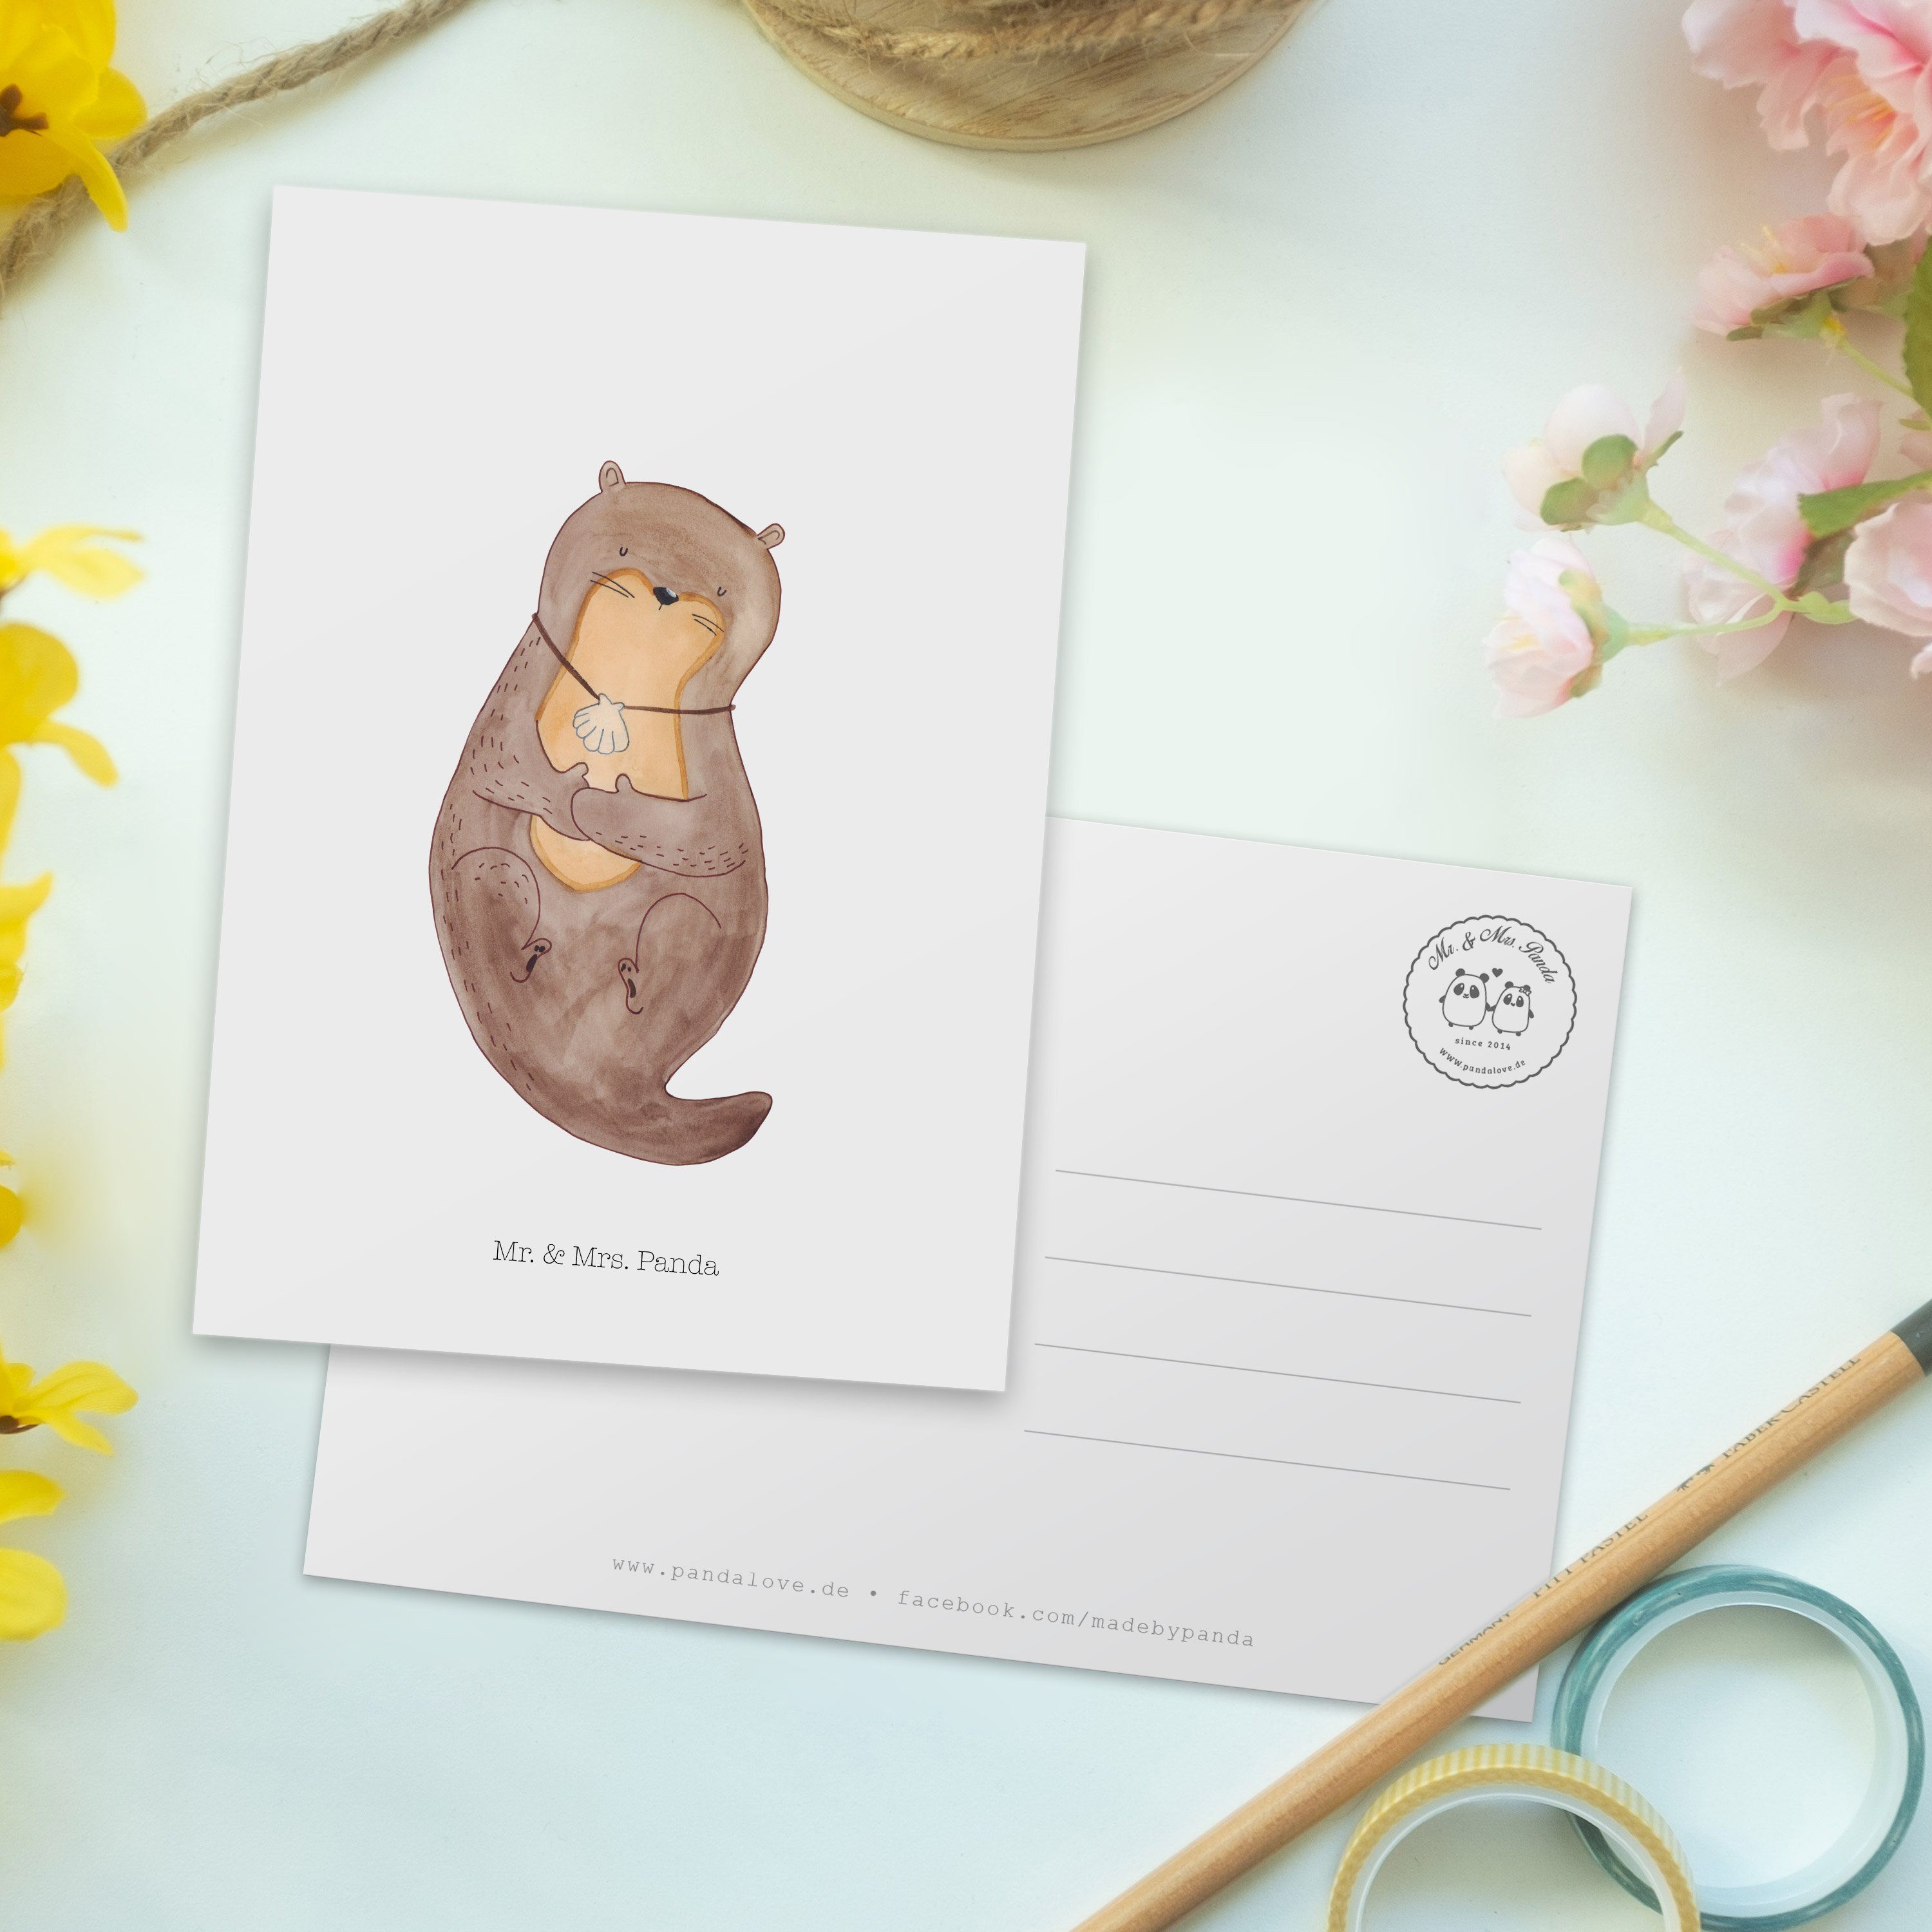 Mr. & Mrs. Panda Postkarte mit Weiß süß, - Einladun Muschelmedaillon - Otter Geschenk, Seeotter